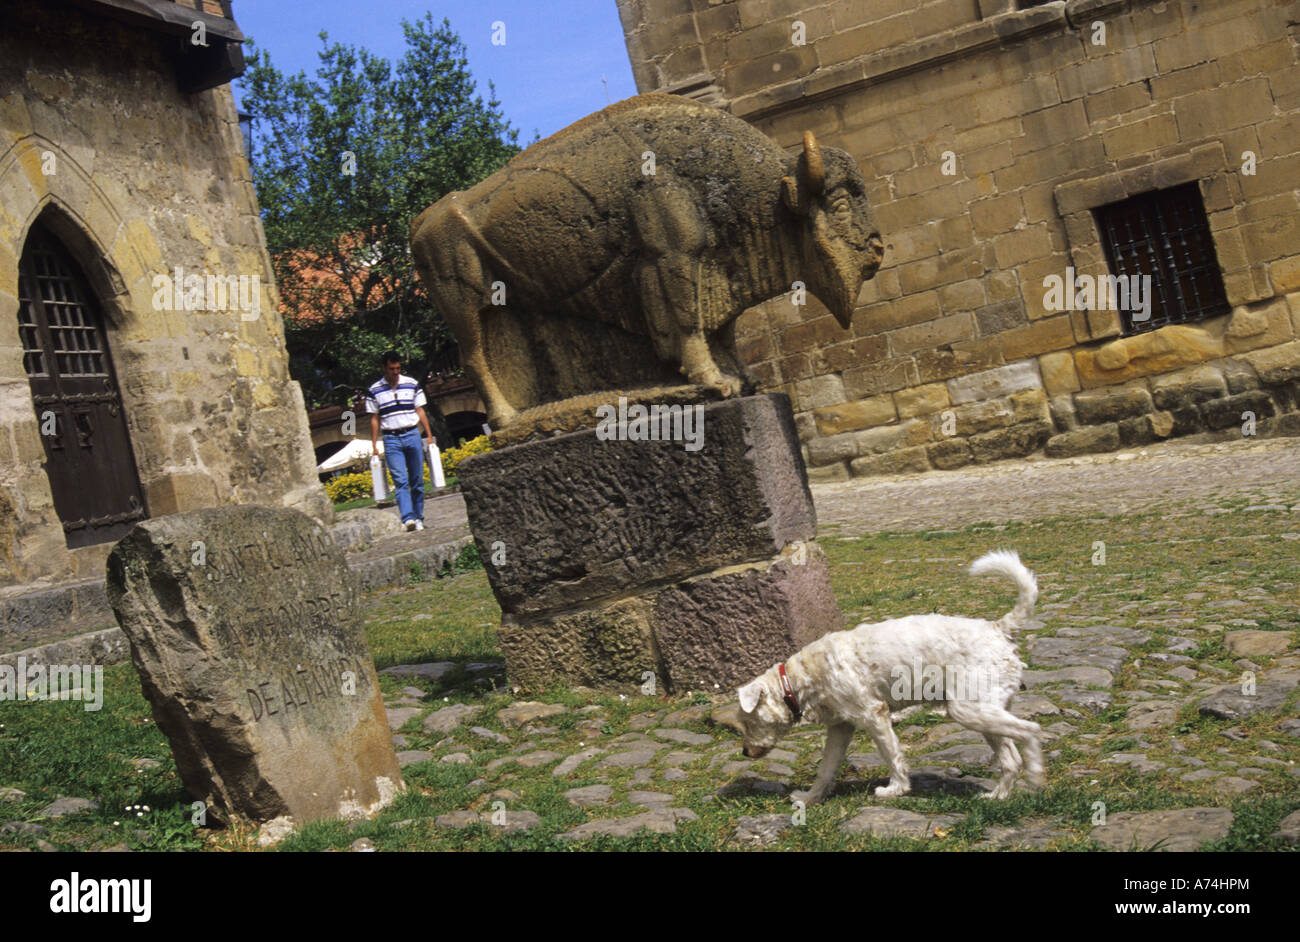 Monument de bisons de la grotte d'Altamira SANTILLANA DEL MAR Cantabrie Espagne Banque D'Images